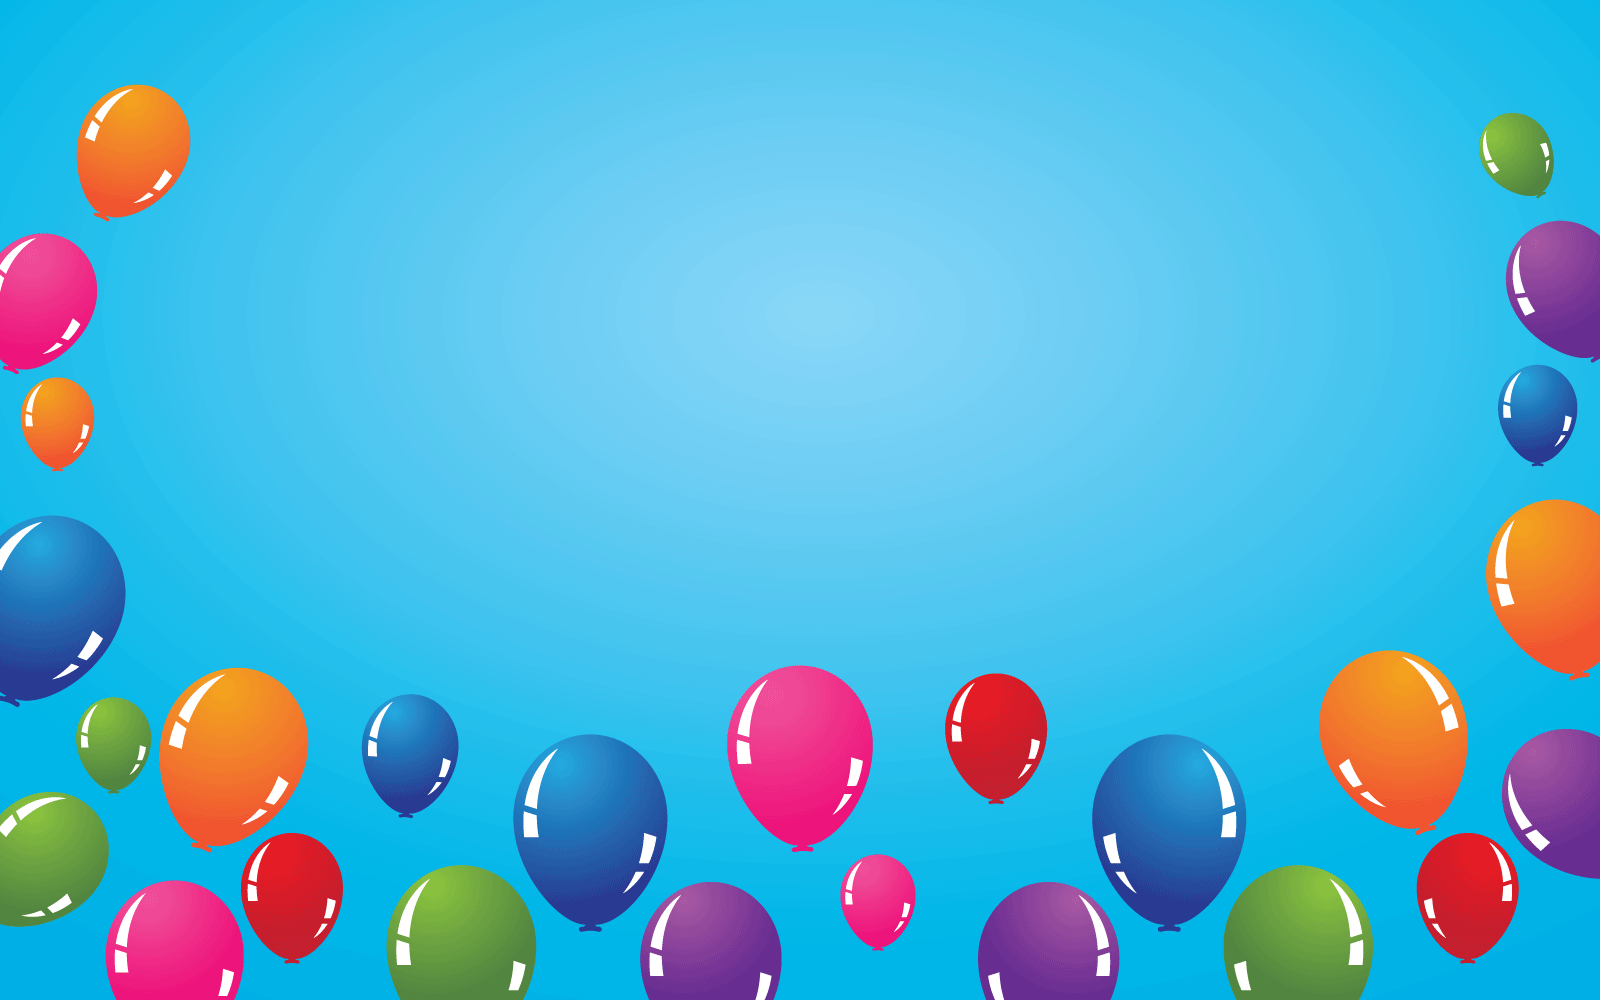 Realistic Balloon Illustration on Blue Background